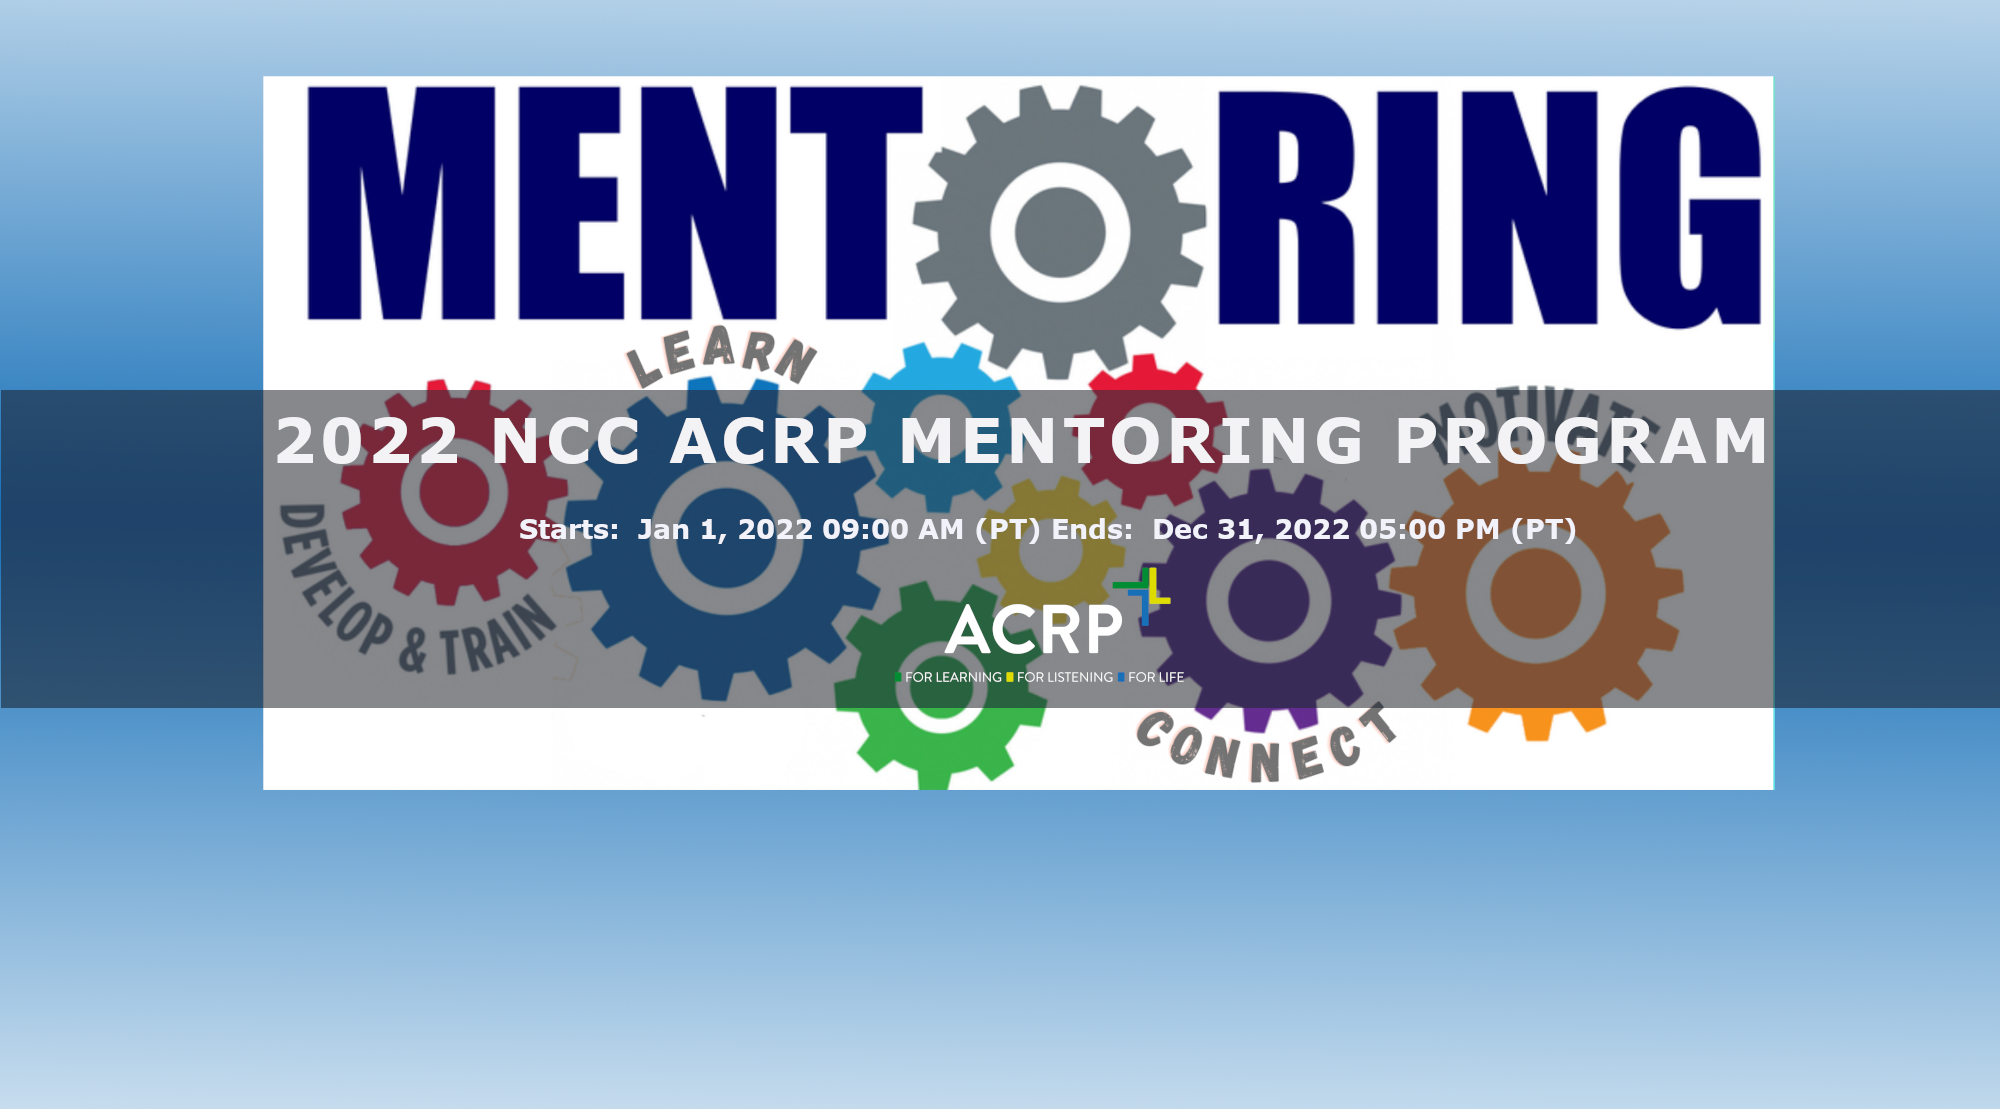 2022 NCC ACRP MENTORING PROGRAM